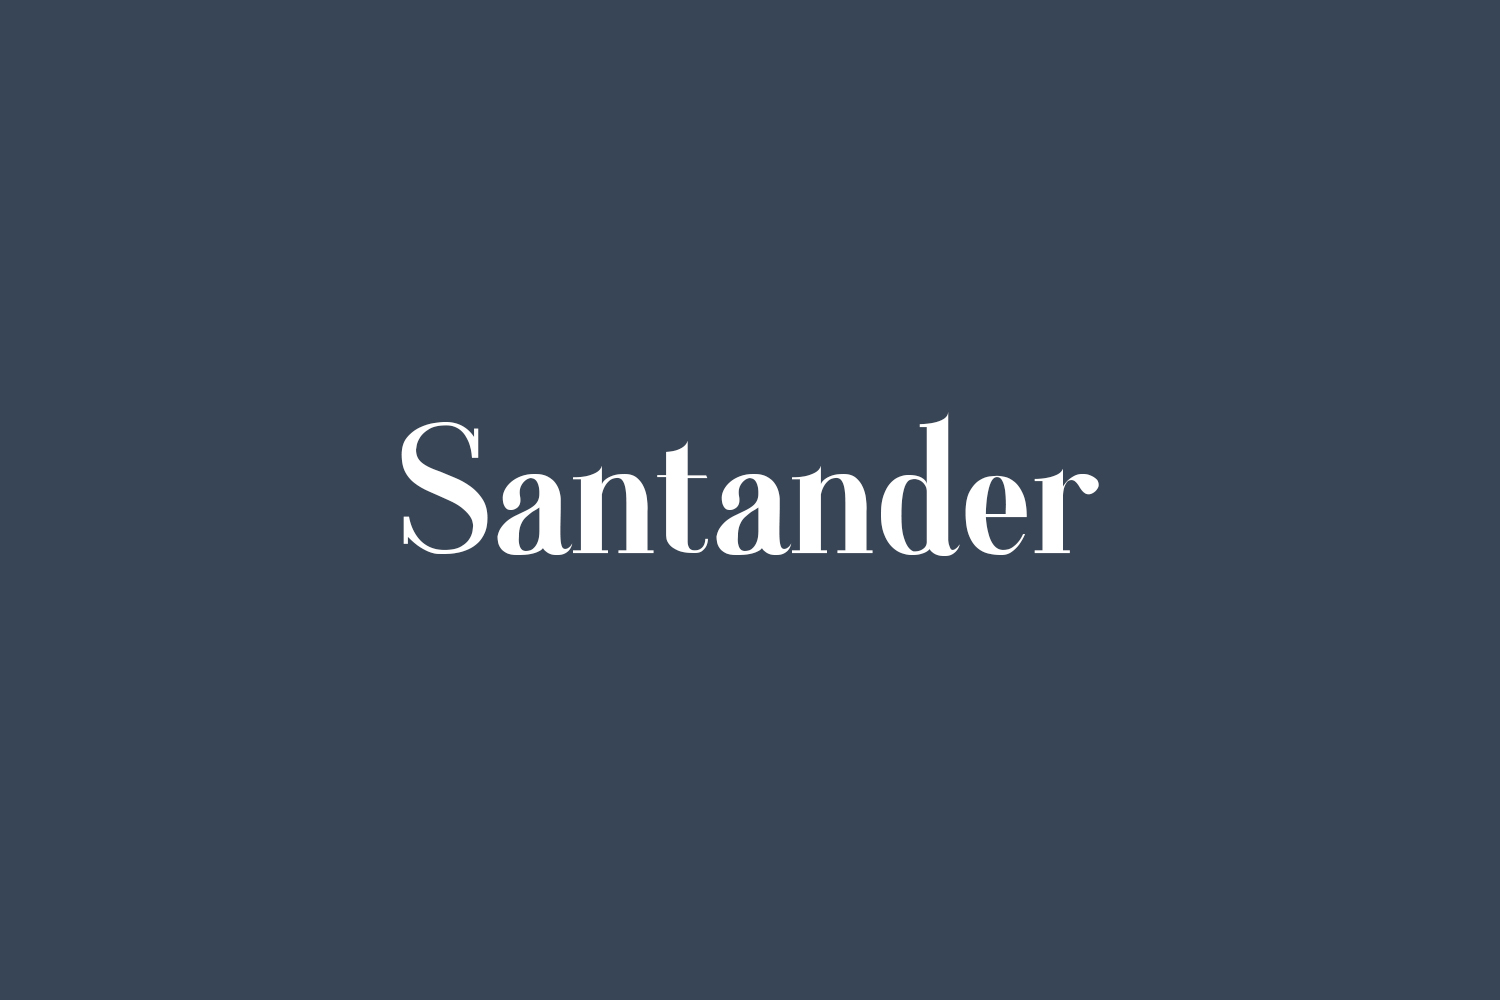 Santander Free Font